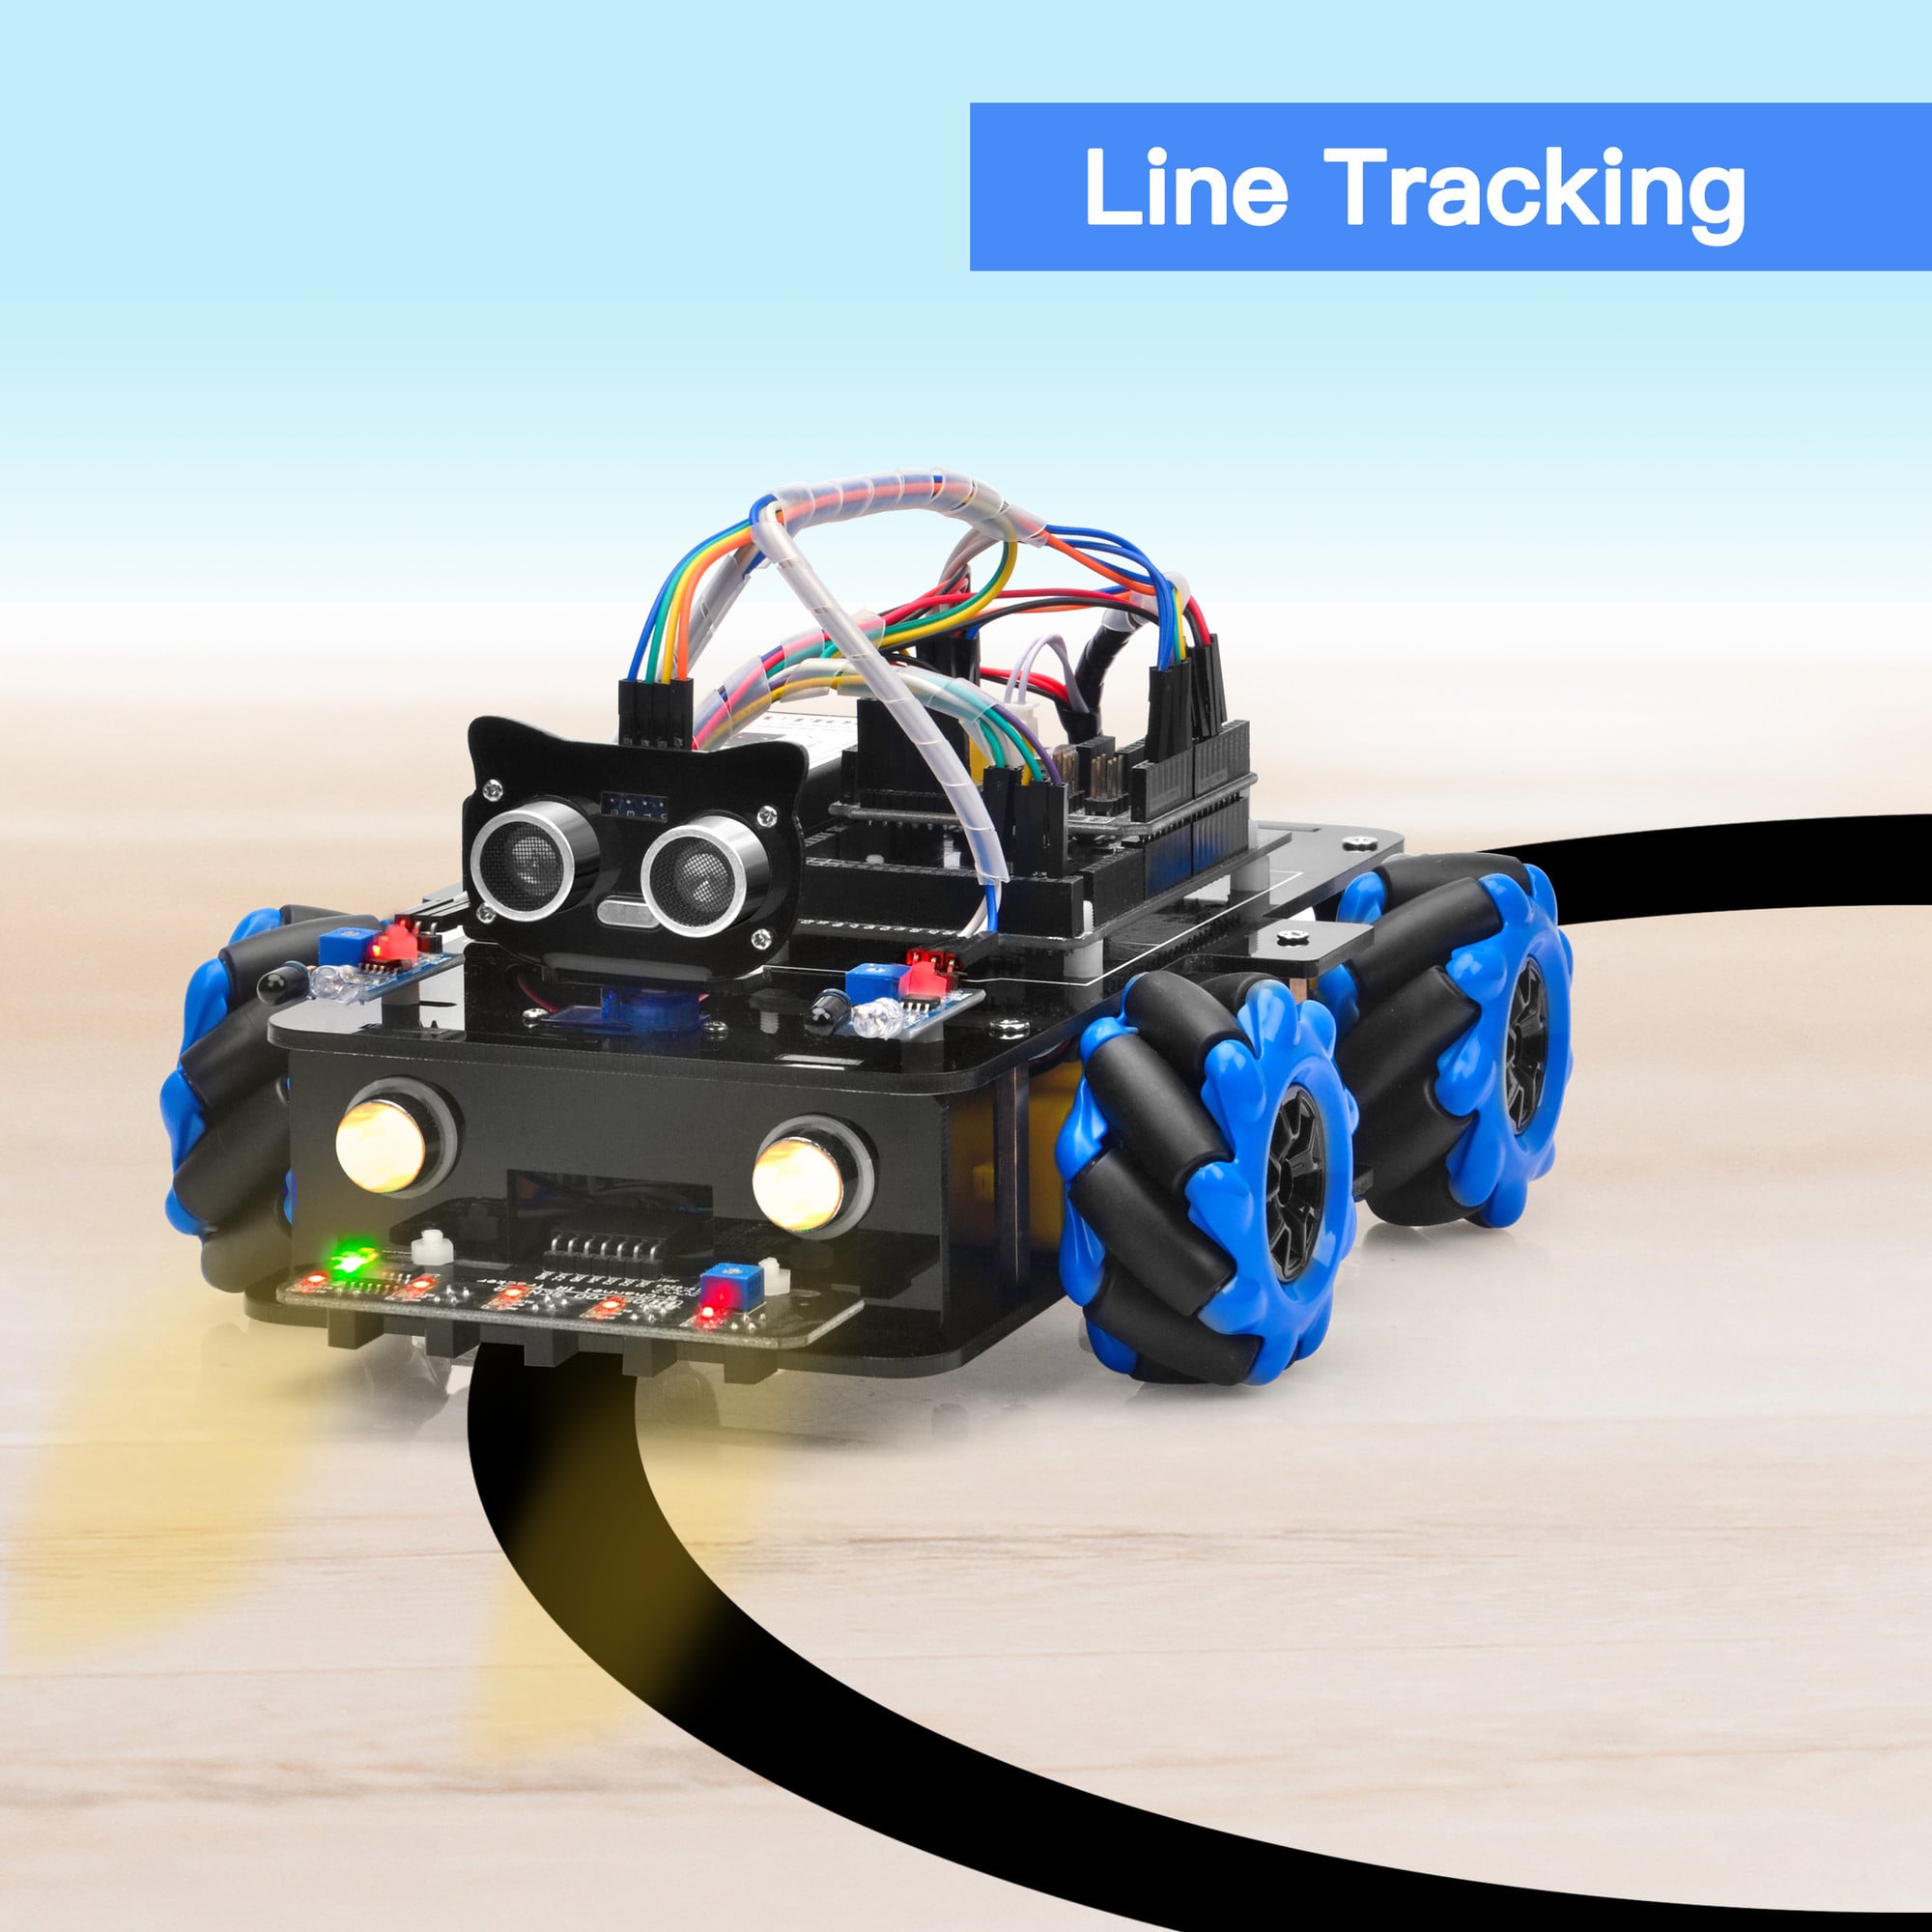  V2.0 Mecanum-Rad-Roboterbausatz für Arduino Mega2560 - Lektion 3: Linienverfolgung des Roboterautos